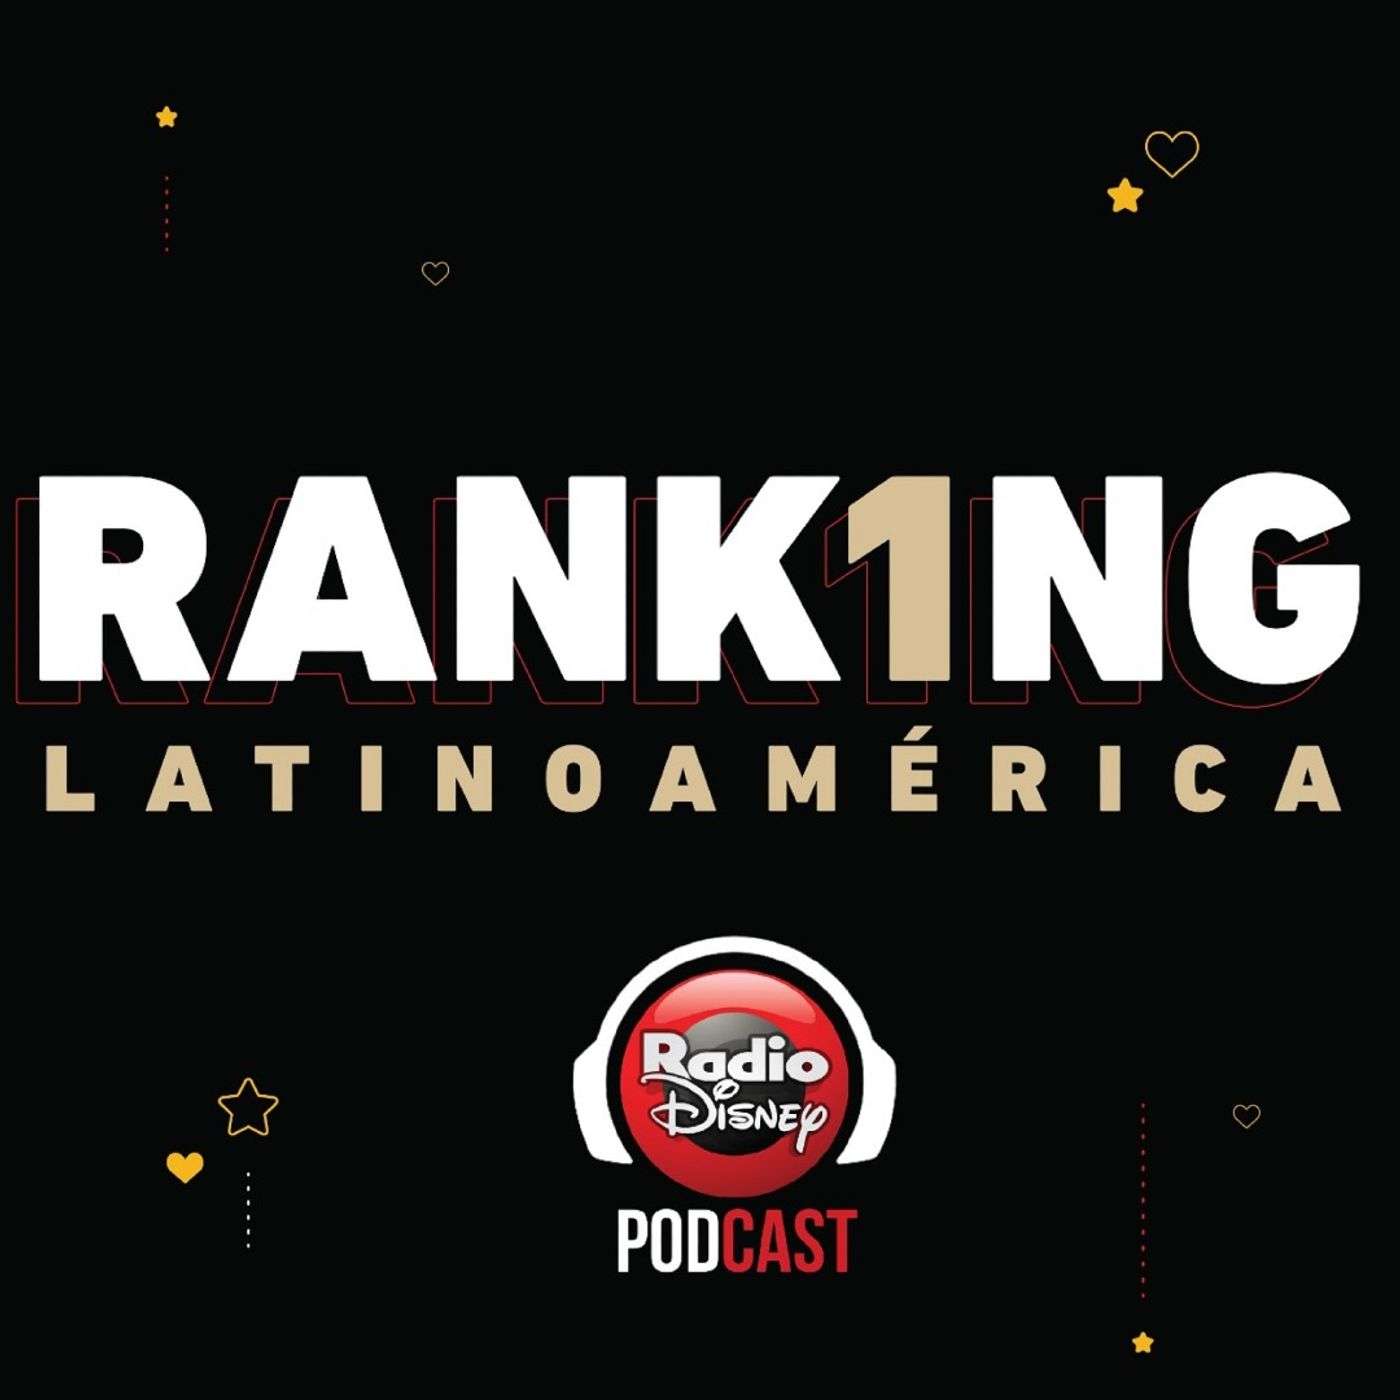 Ranking Latinoamérica